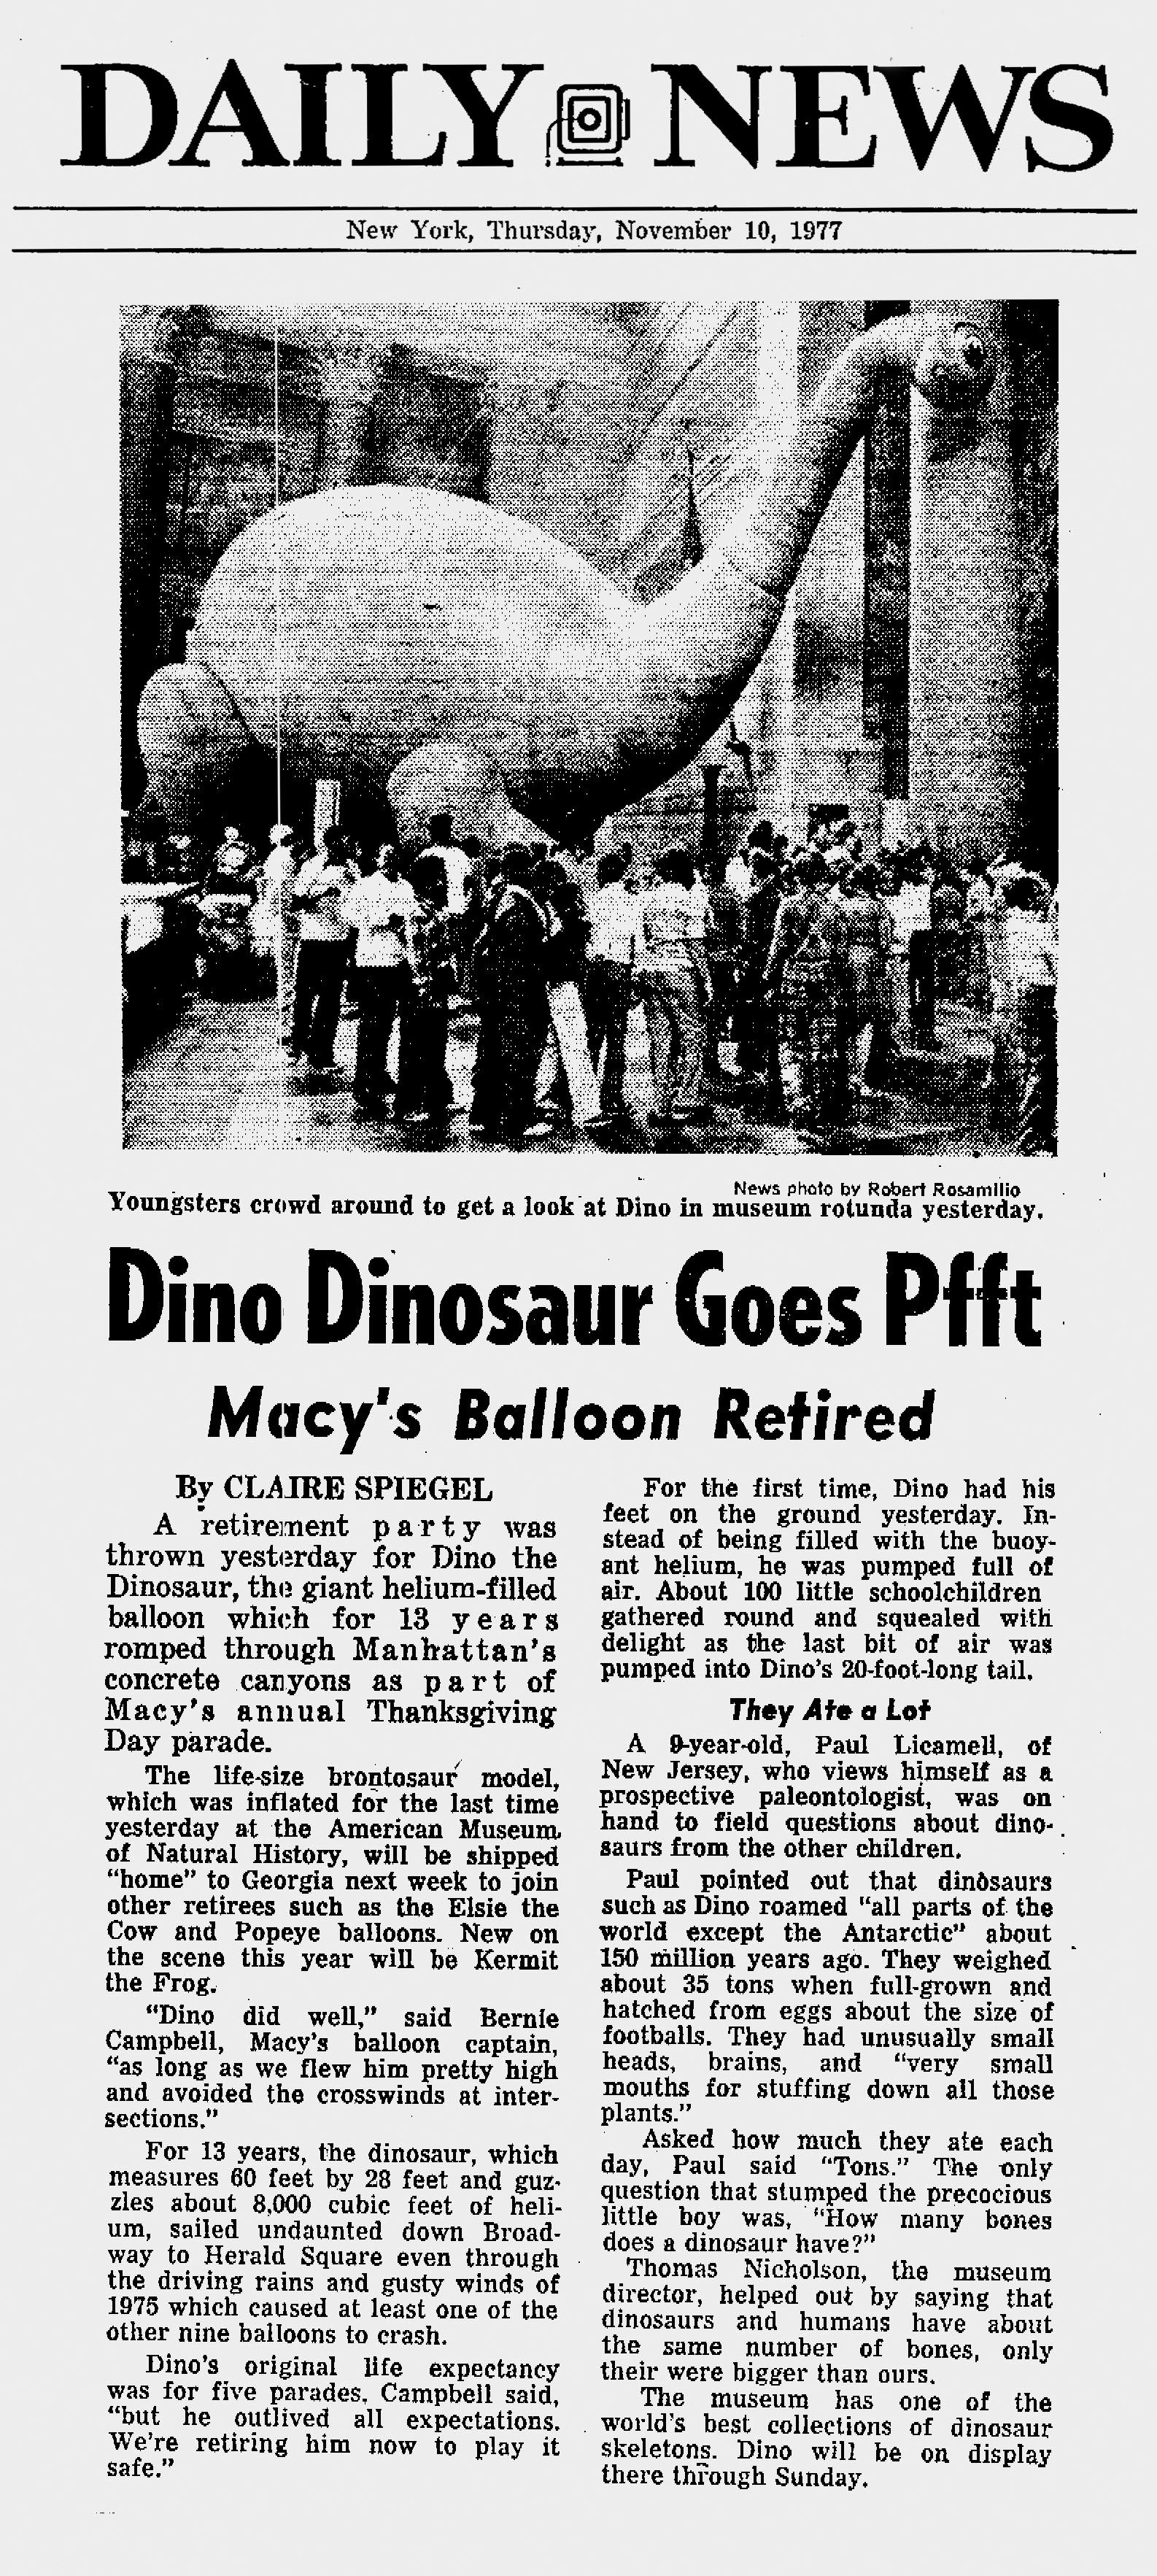 Sinclair Oil Macy's ballon retirement newspaper article